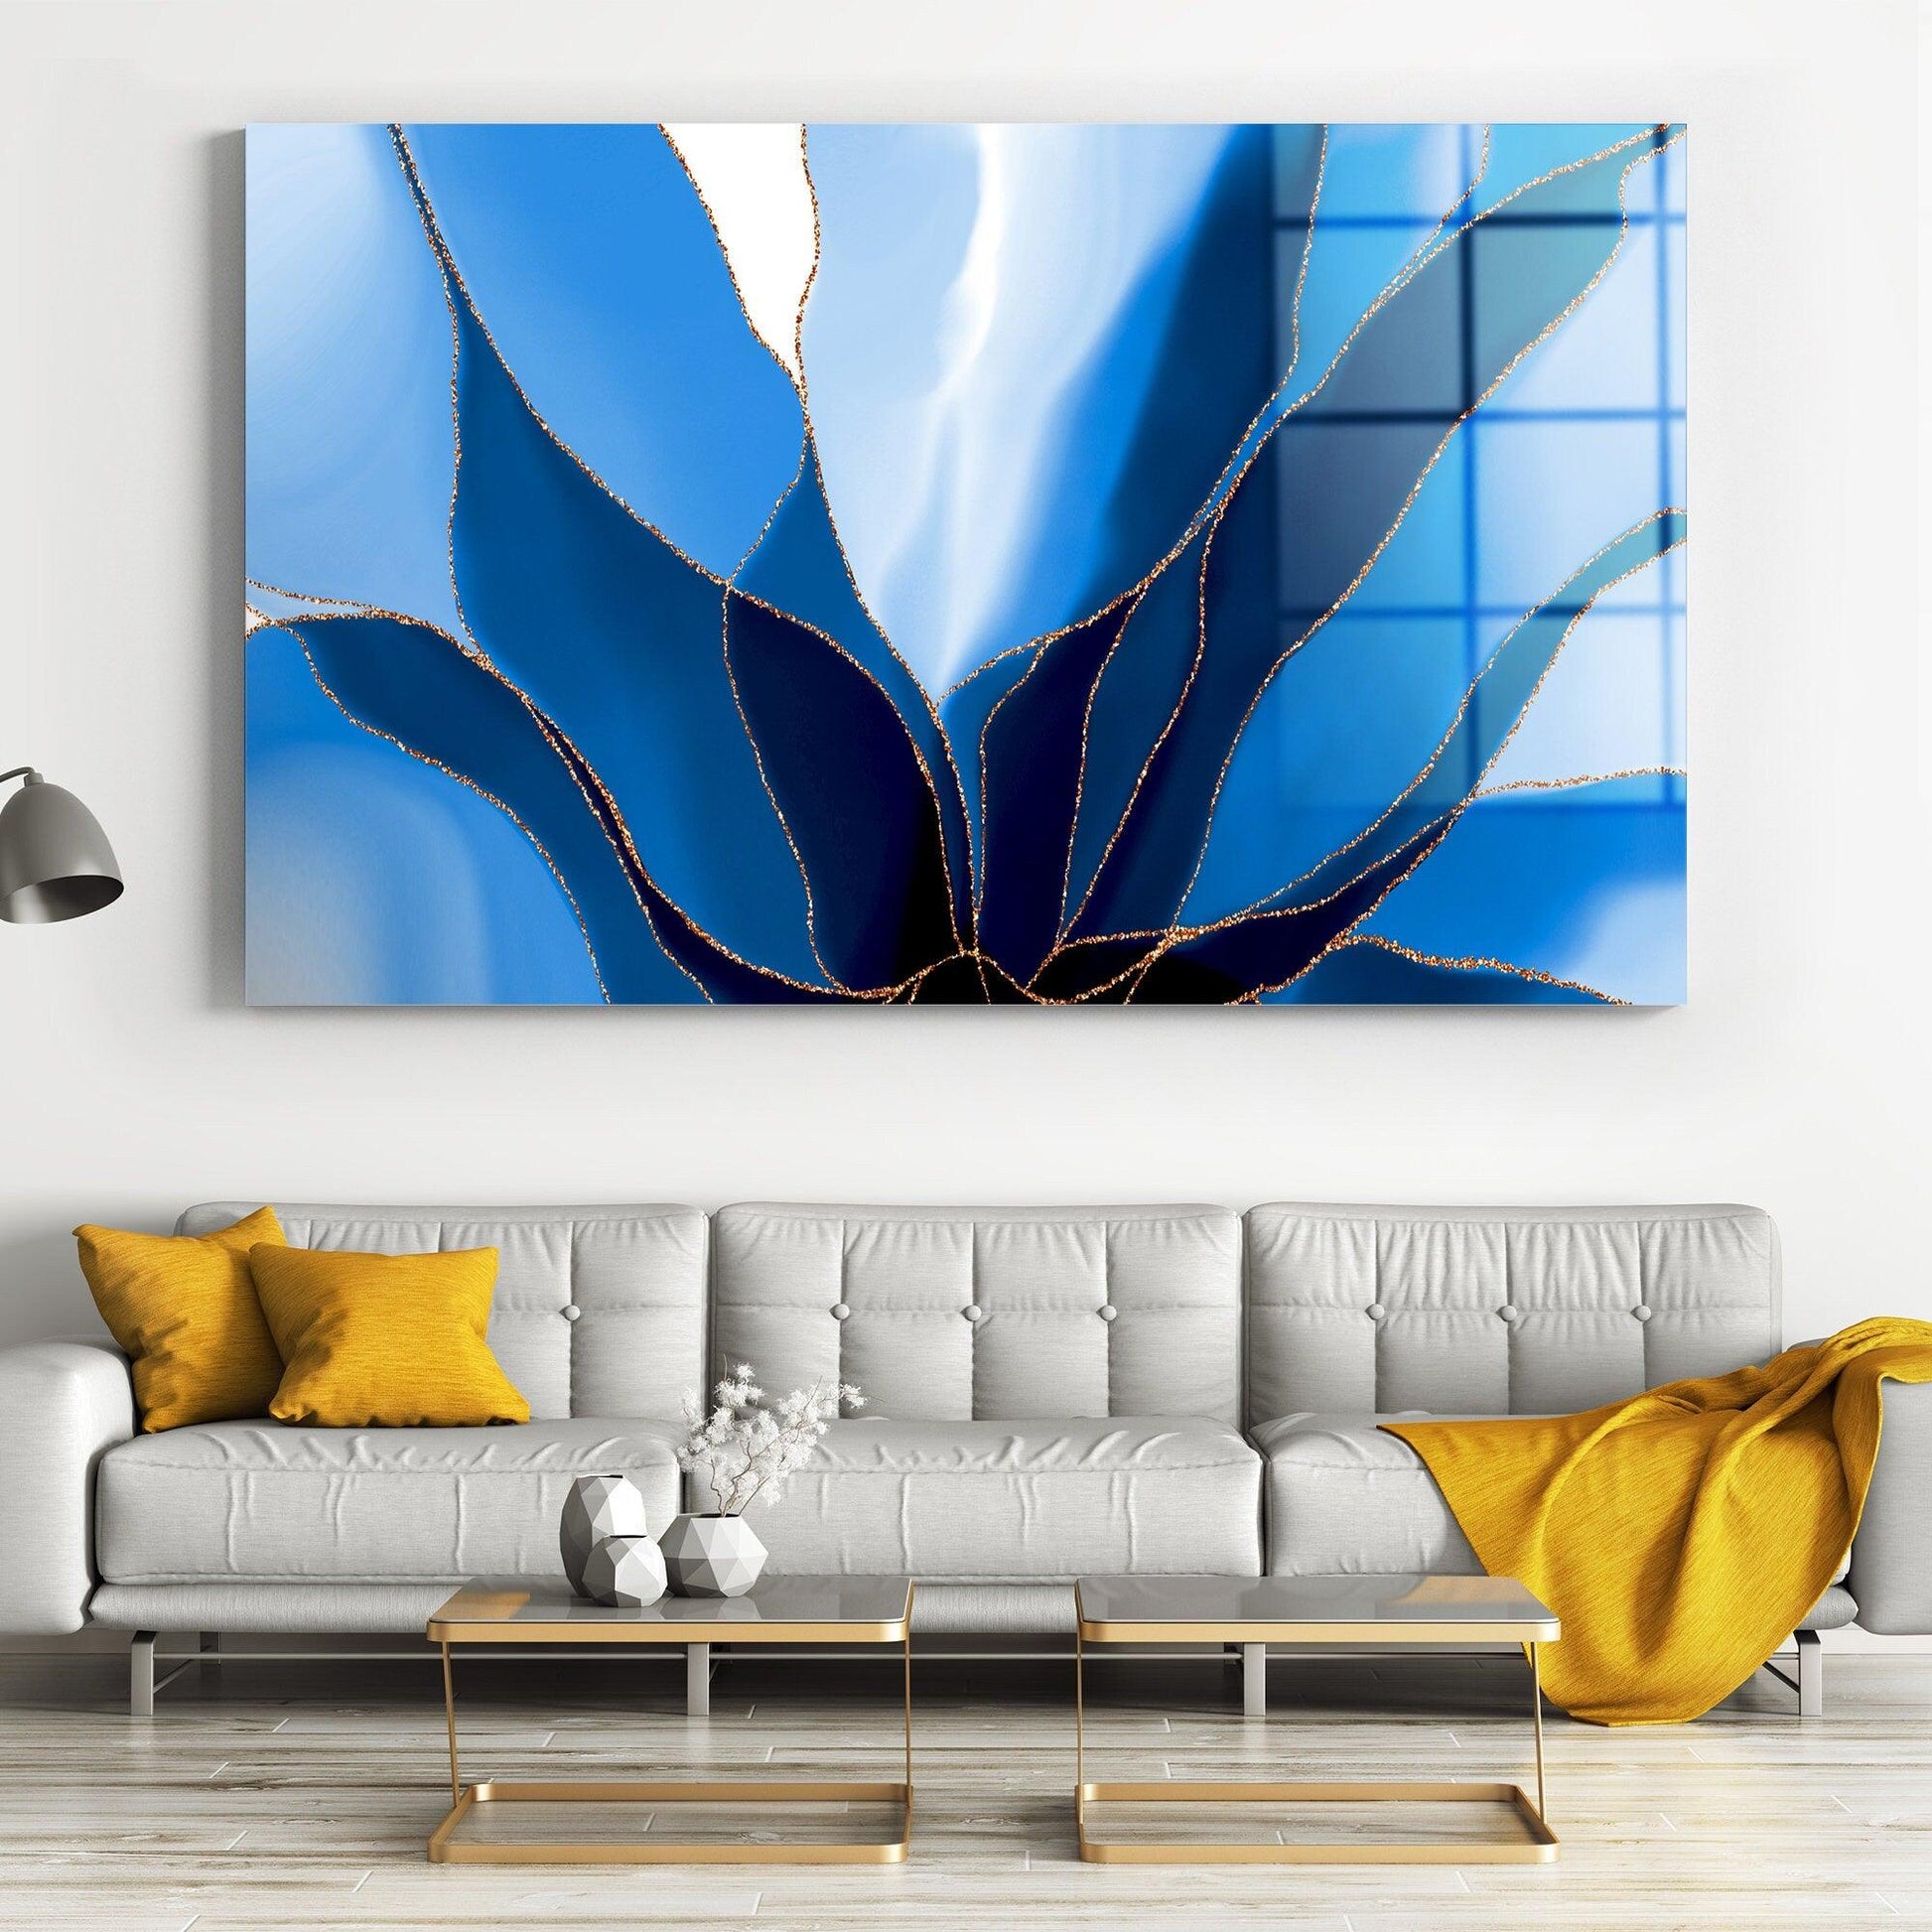 blue abstract flower Glass Printing Wall Art |Large Wall Decor Living Room-Glass Wall Art-Tempered Glass Wall Art-Abstract Marble Texture